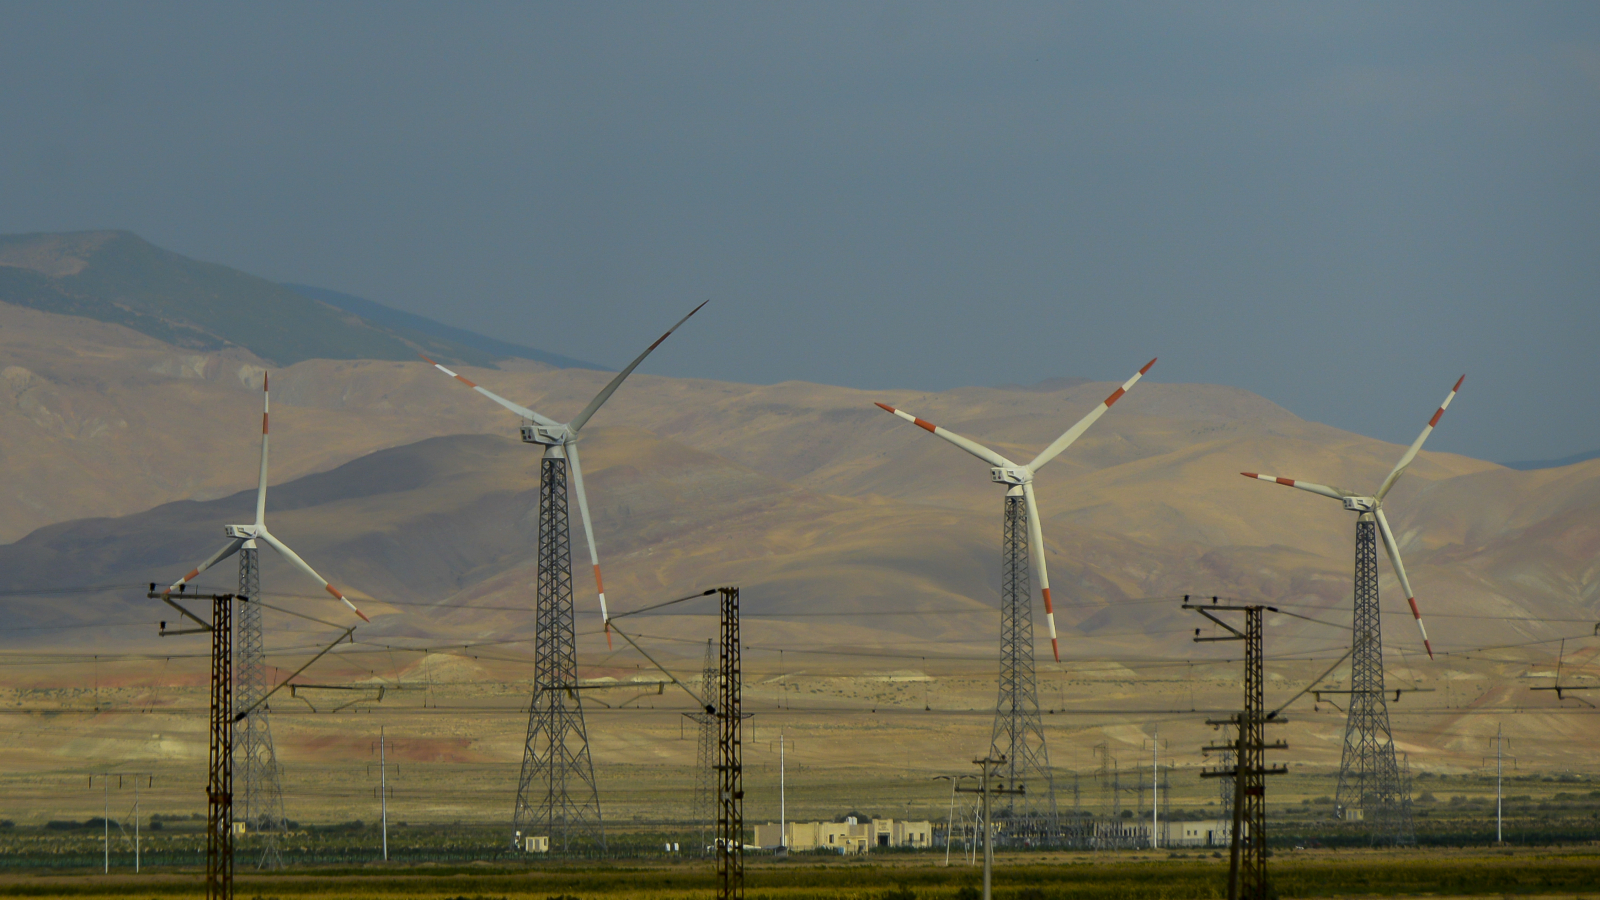 Azerbaijan: International Energy Charter Forum highlights energy transition